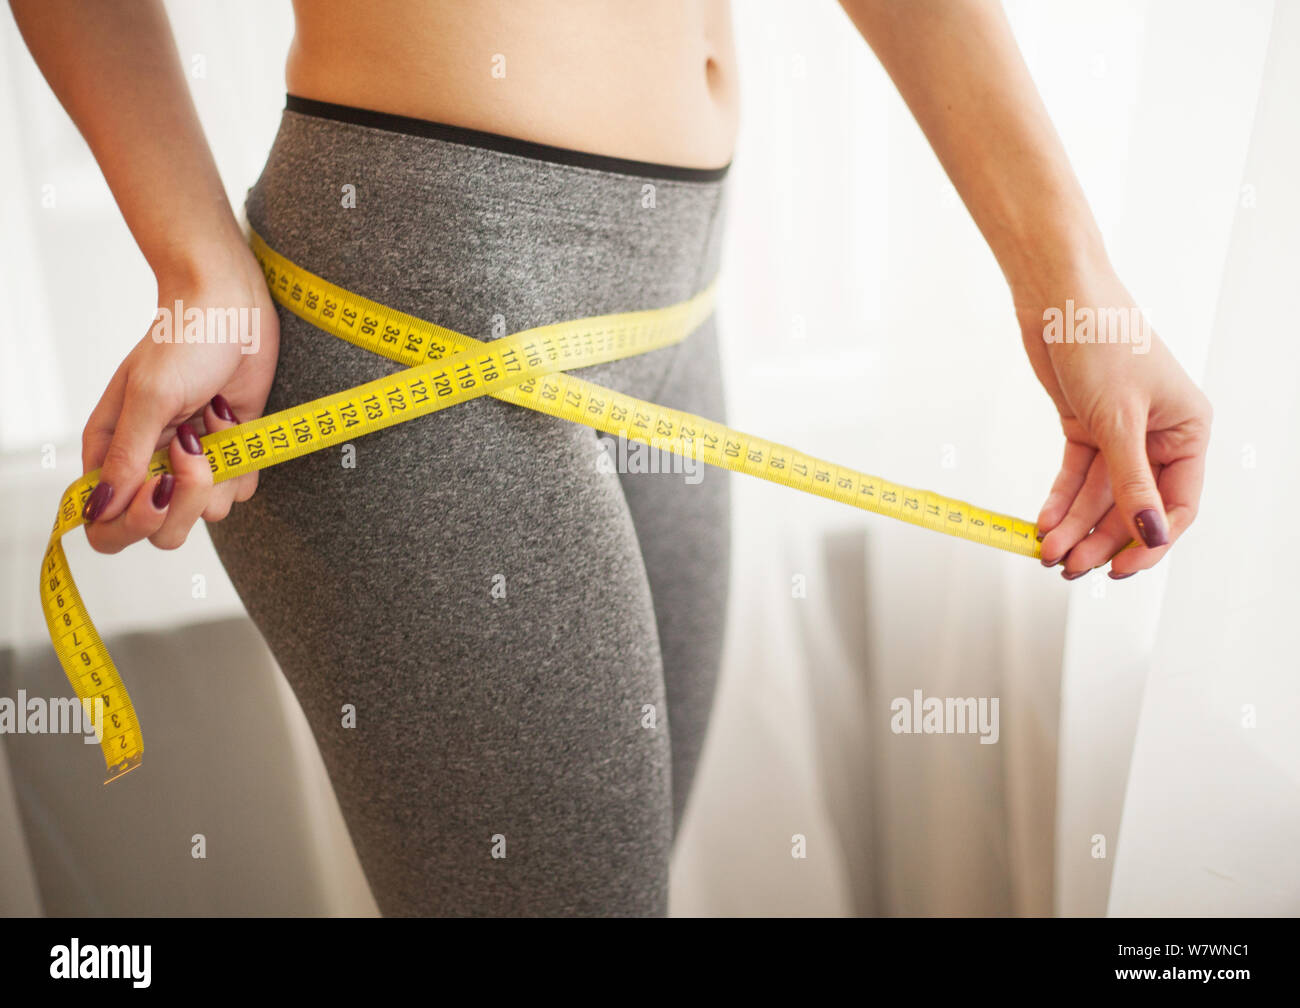 Schlanke junge Frau dünne Taille Messen mit dem Maßband Stockfotografie -  Alamy